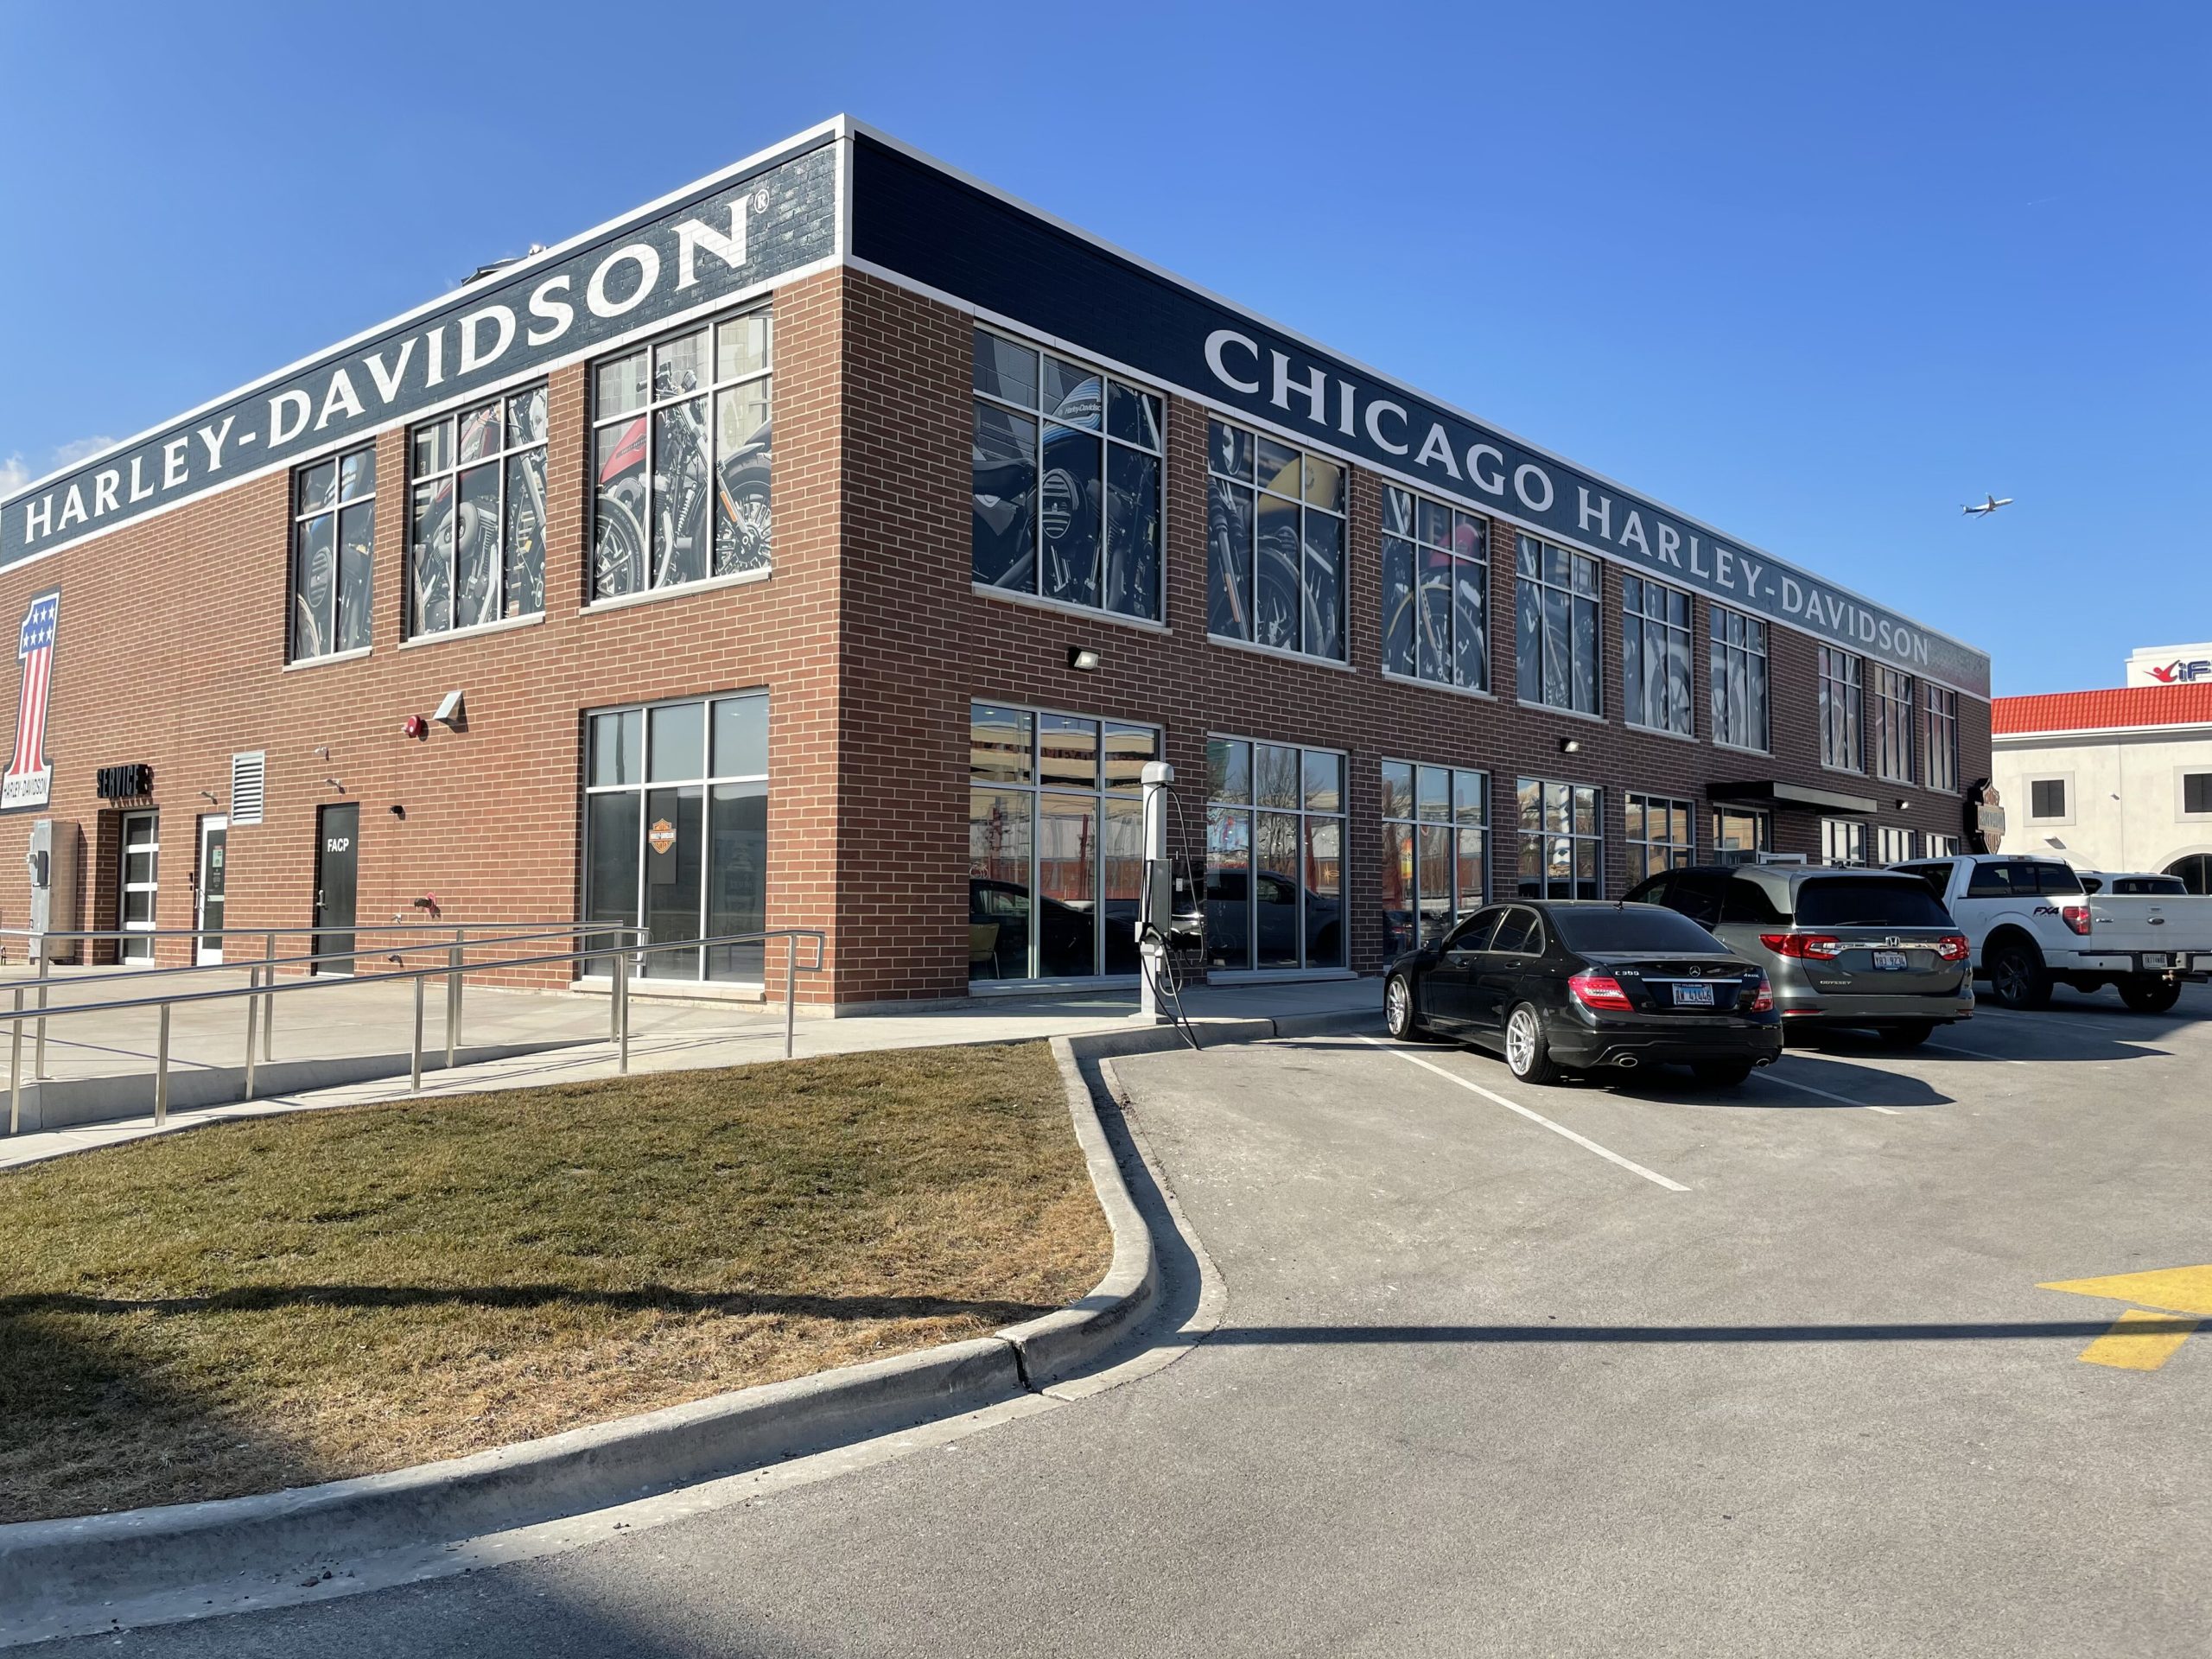 Retail architecture design - Harley Davidson - Rosemont, IL